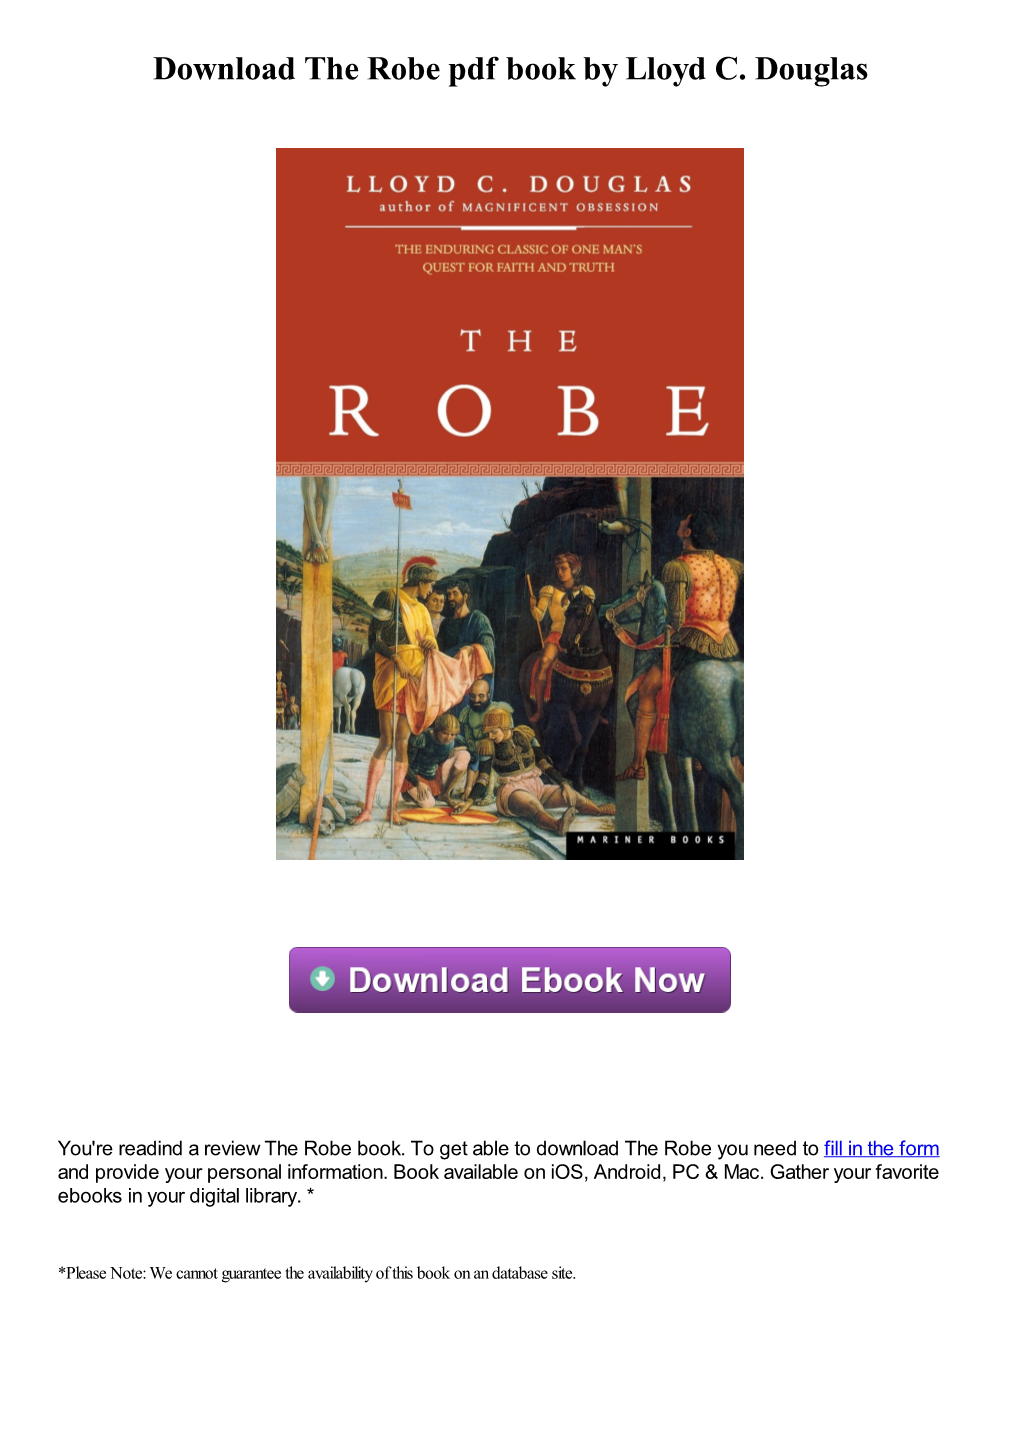 Download the Robe Pdf Book by Lloyd C. Douglas